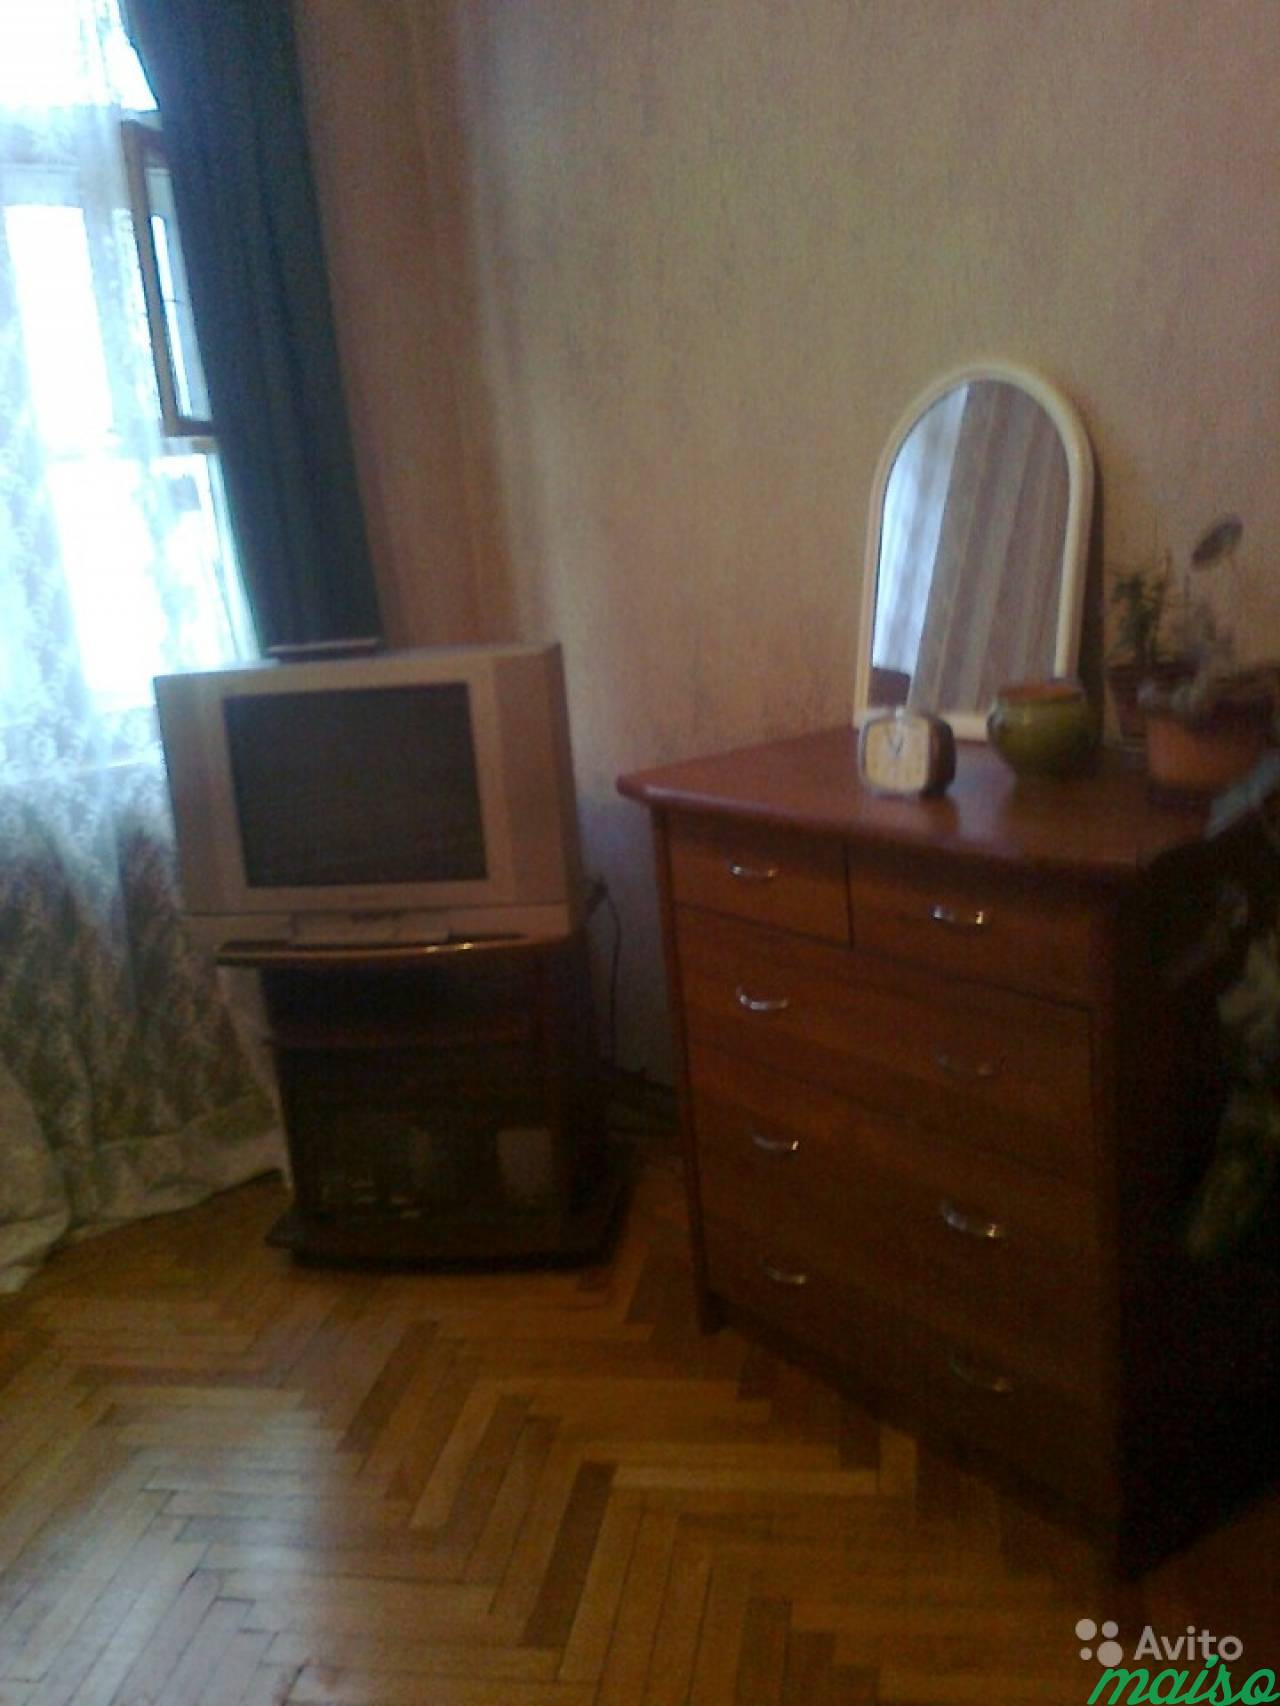 Комната 20 м² в 3-к, 4/5 эт. в Санкт-Петербурге. Фото 2